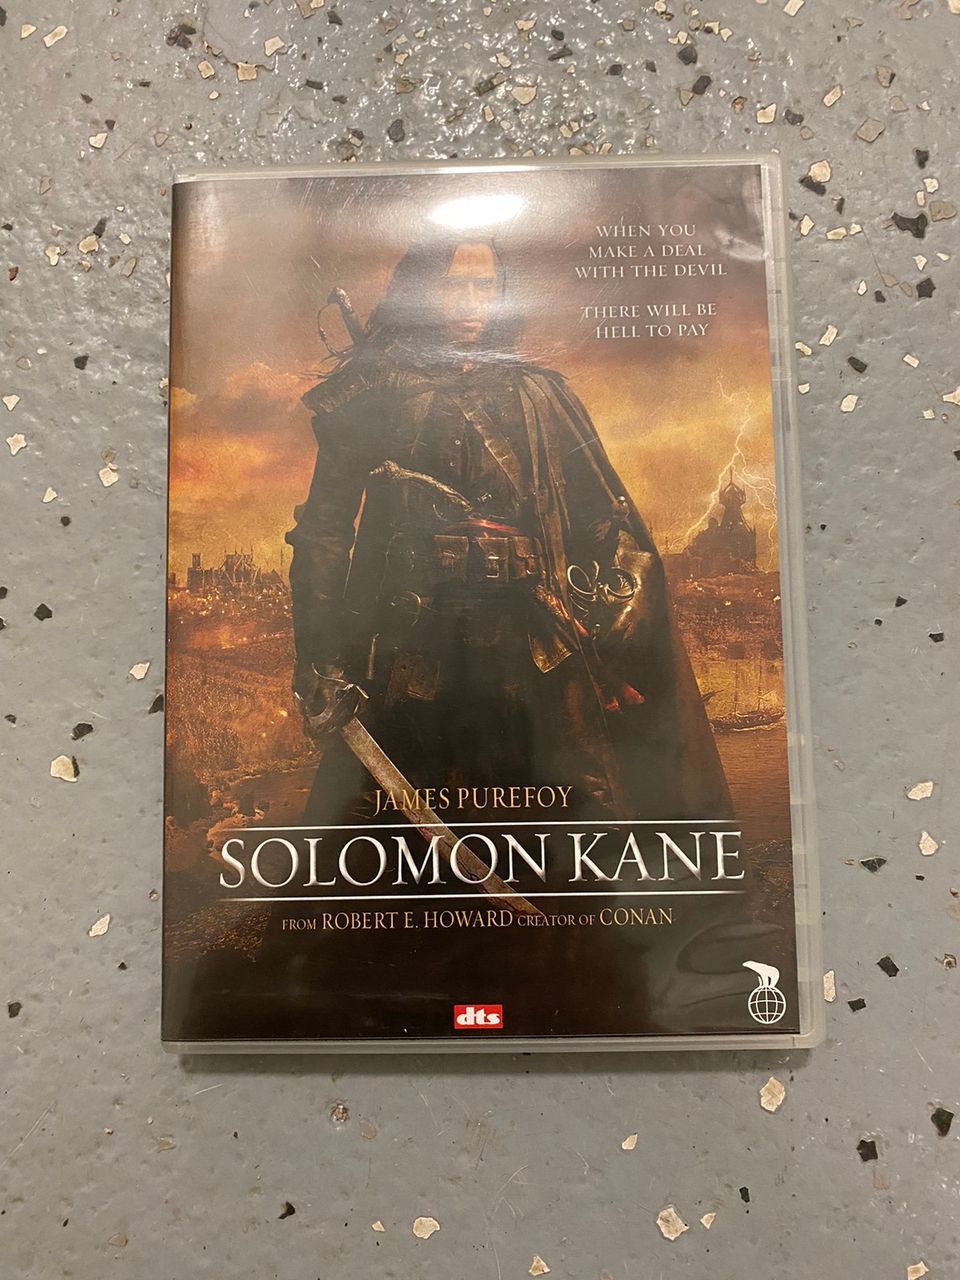 Solomon kane dvd